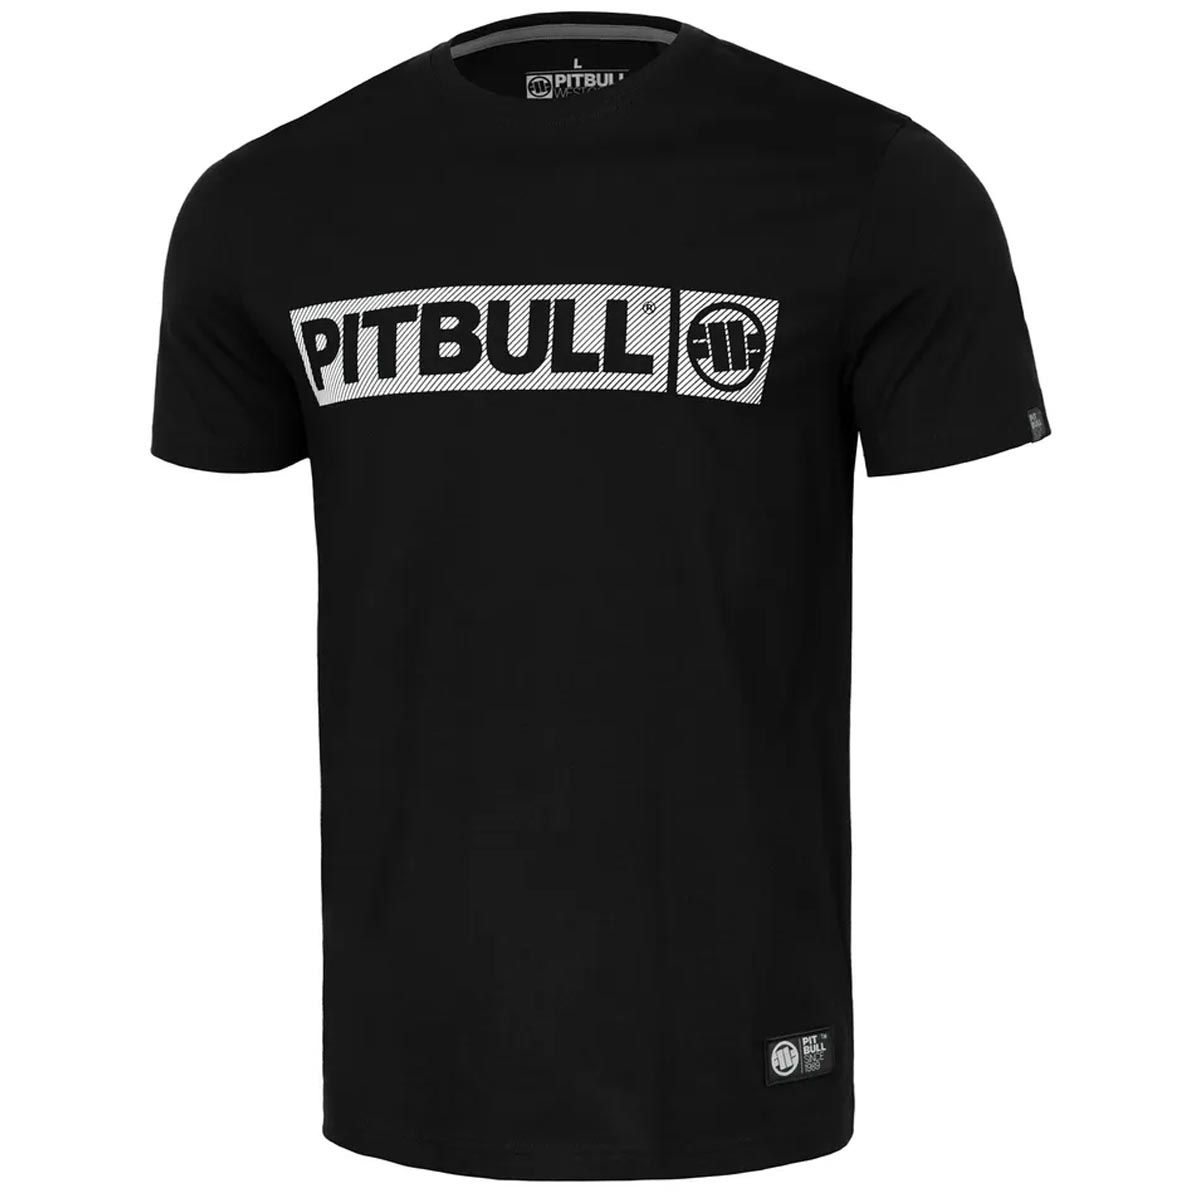 Pit Bull West Coast T-Shirt, Ultra Light Hilltop, black